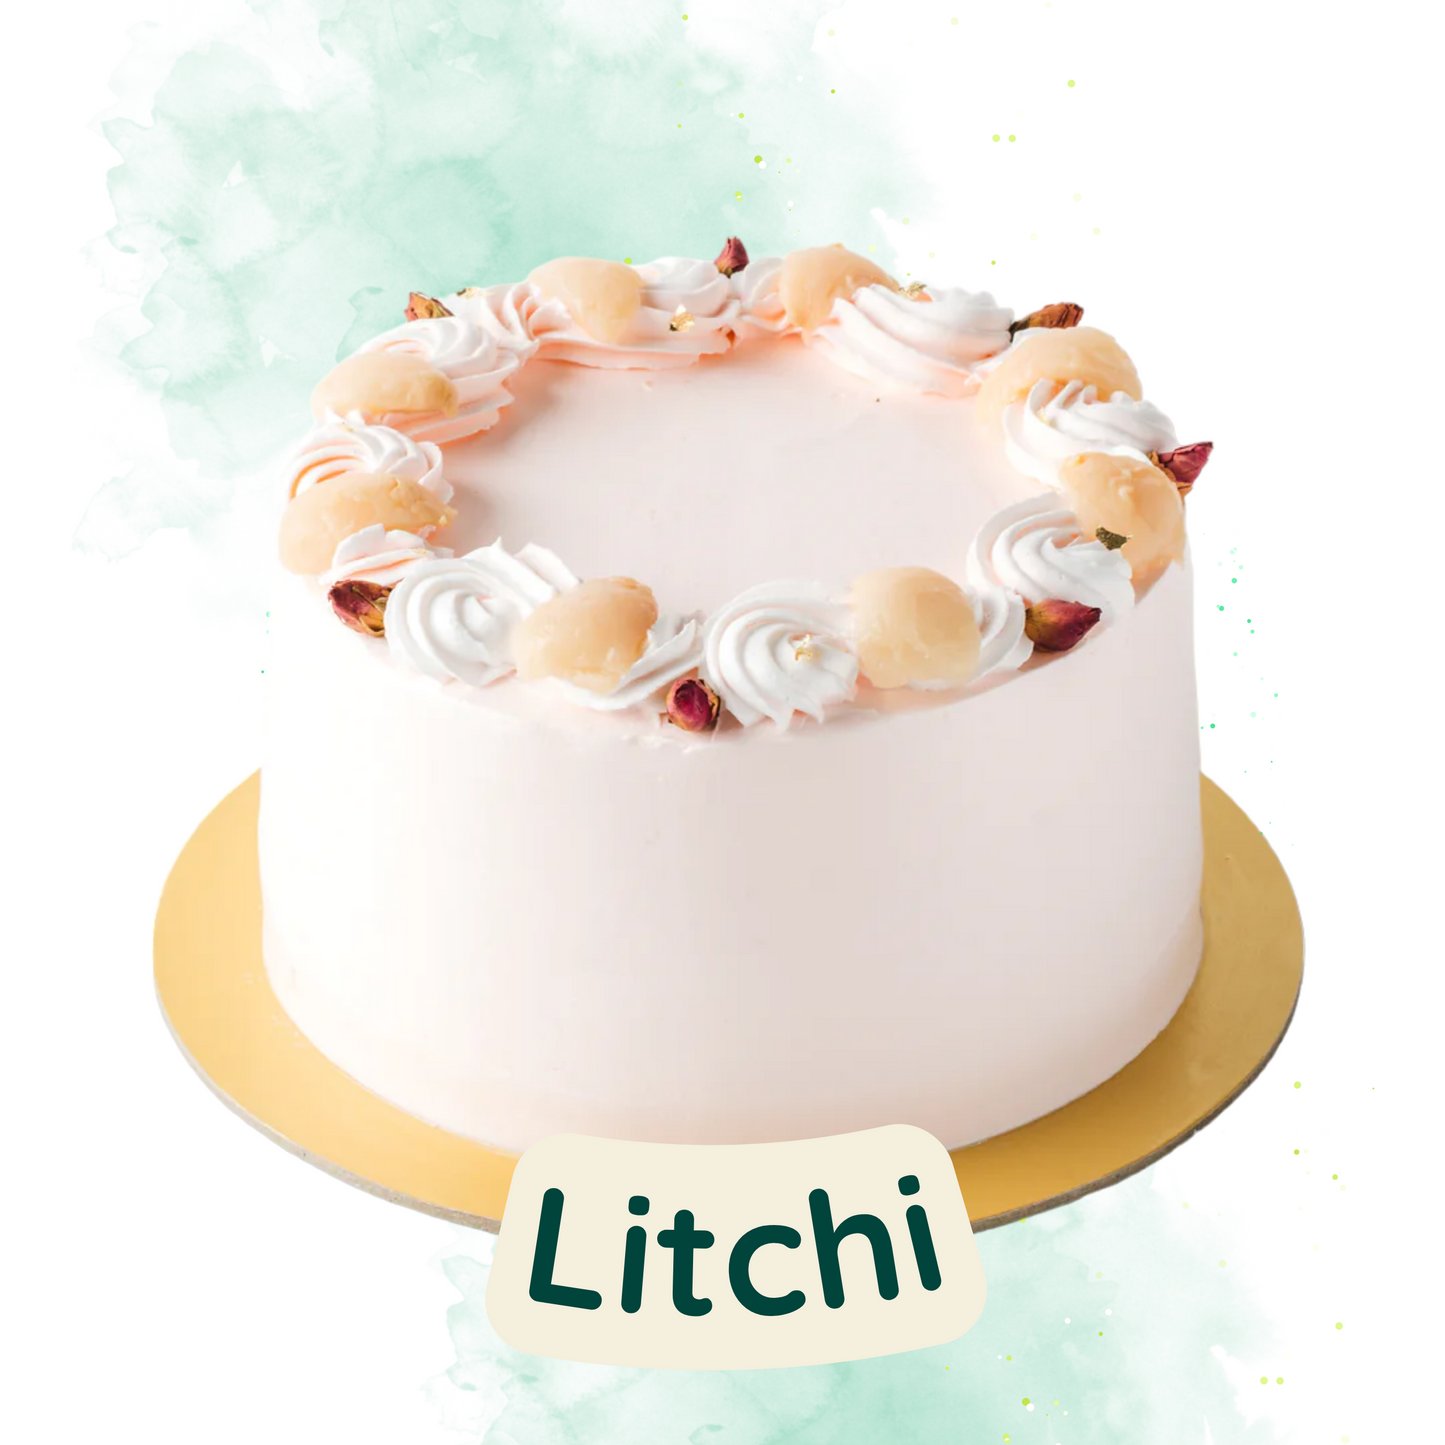 Litchi cake